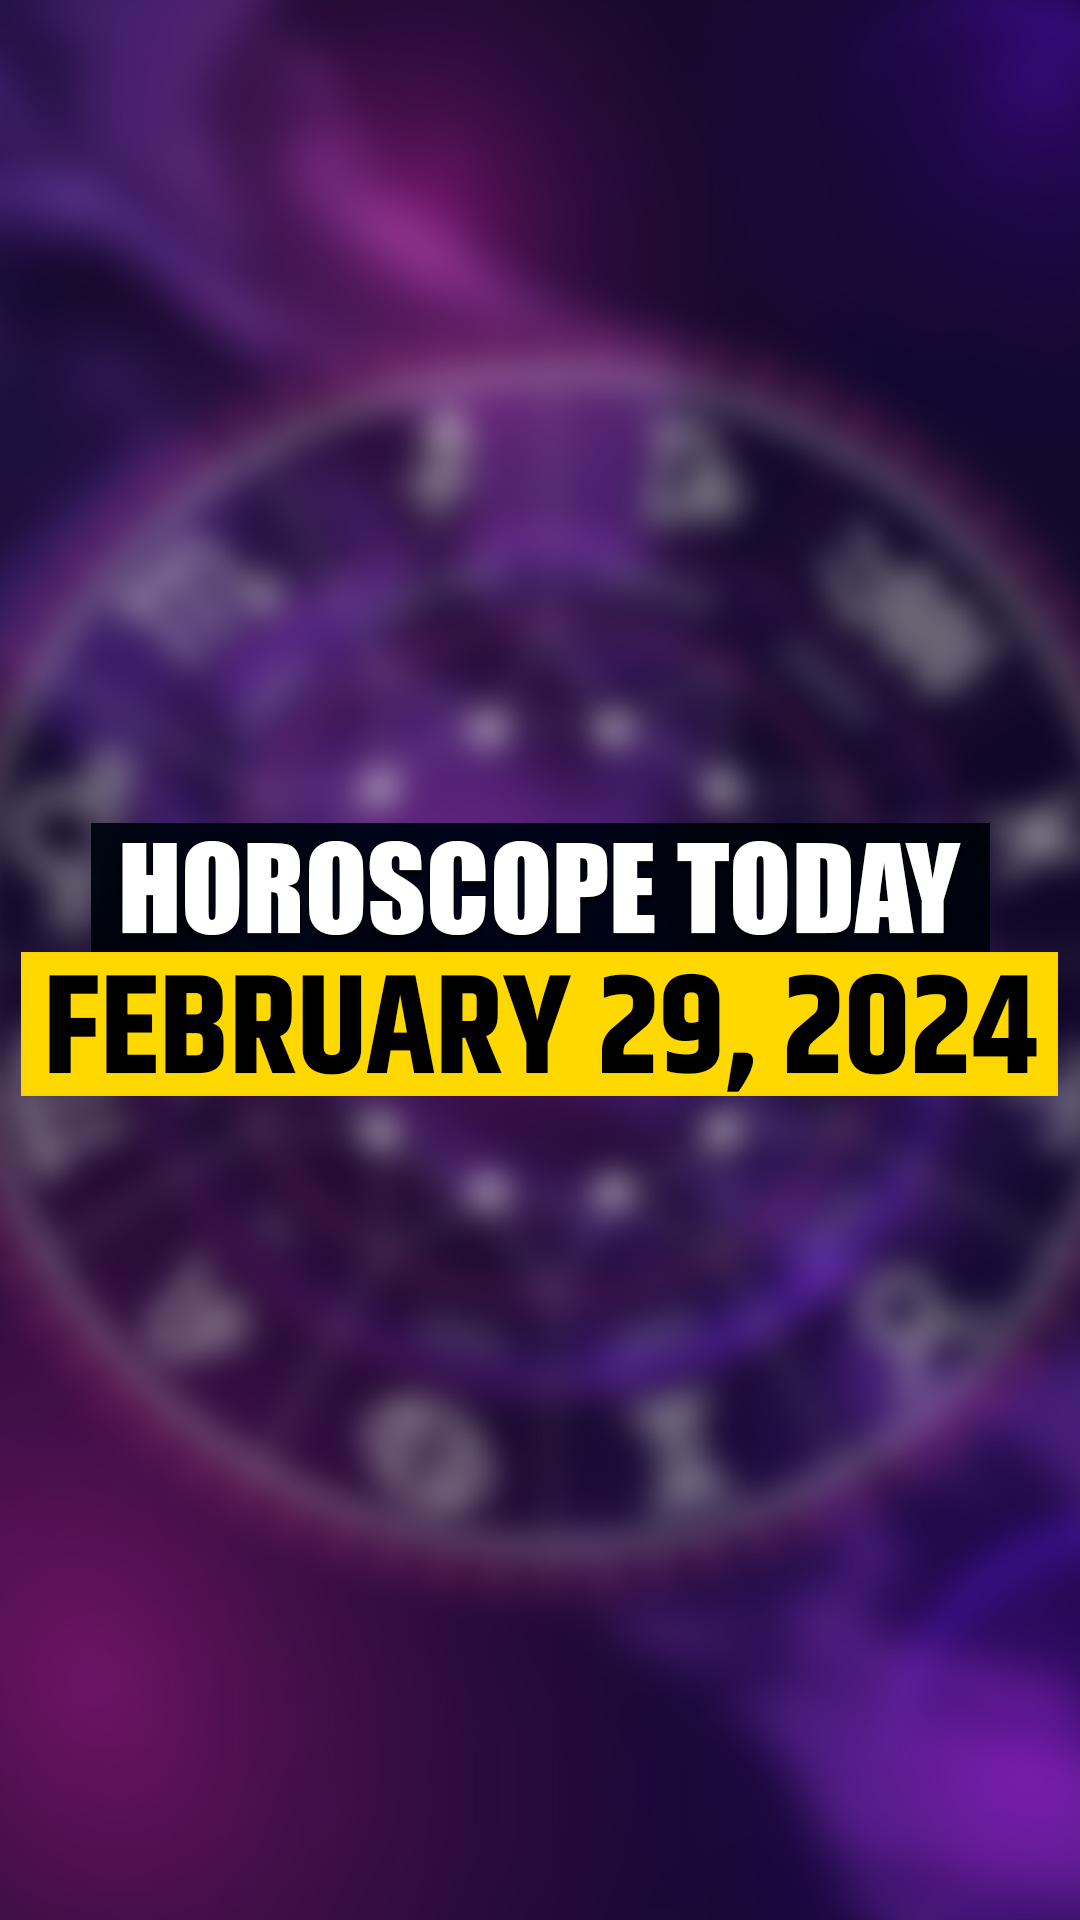 February 29, 2024 horoscope